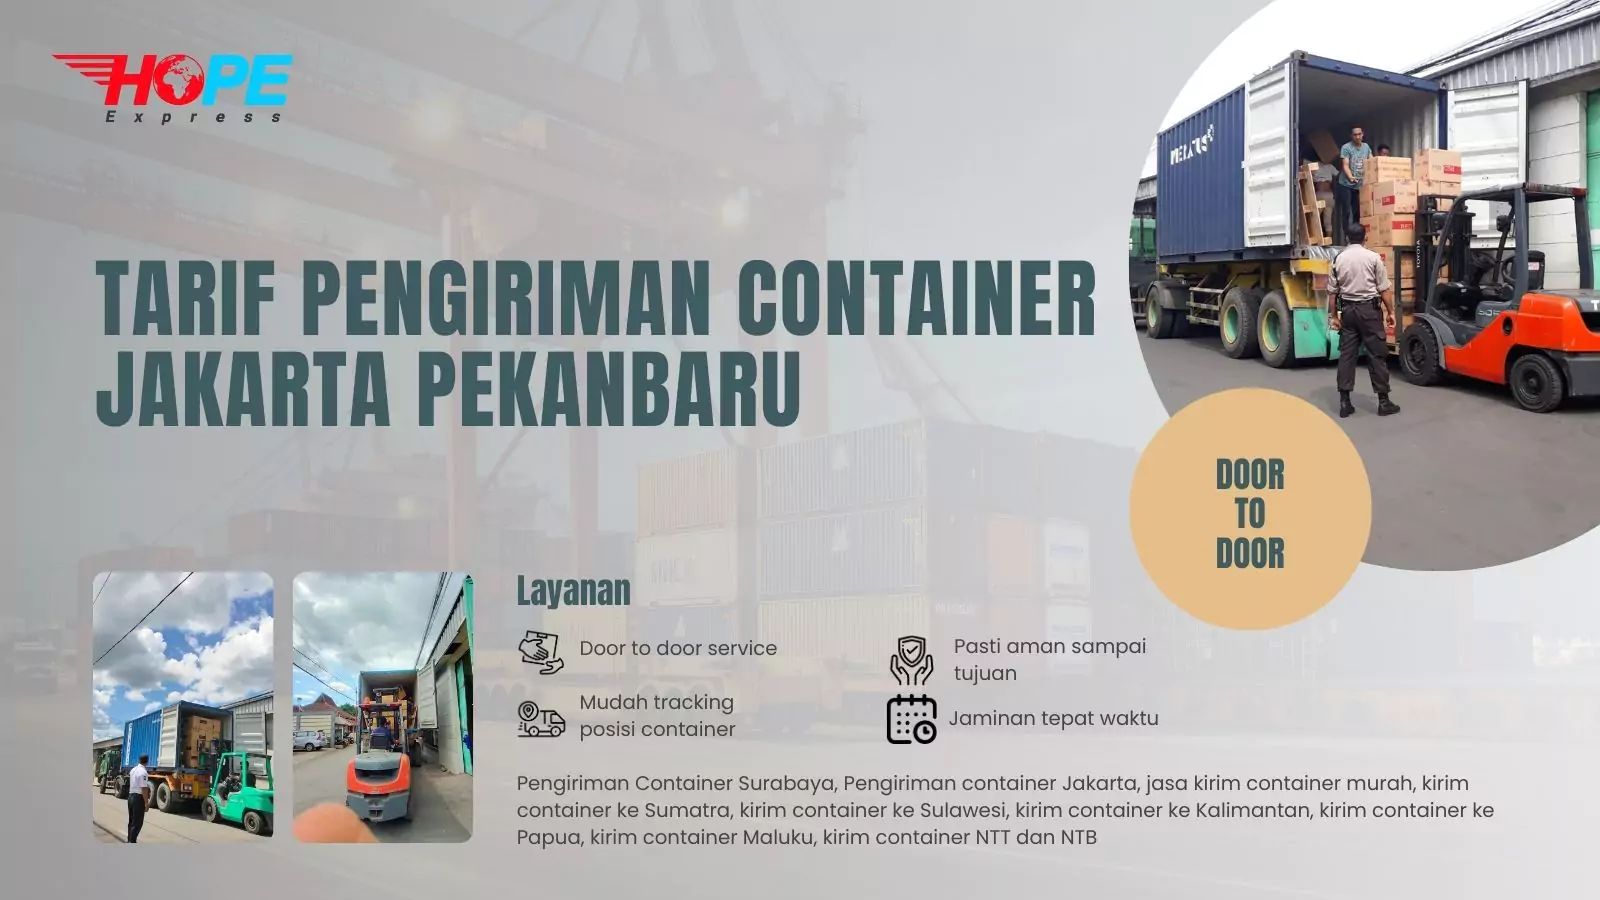 Tarif Pengiriman Container Jakarta Pekanbaru